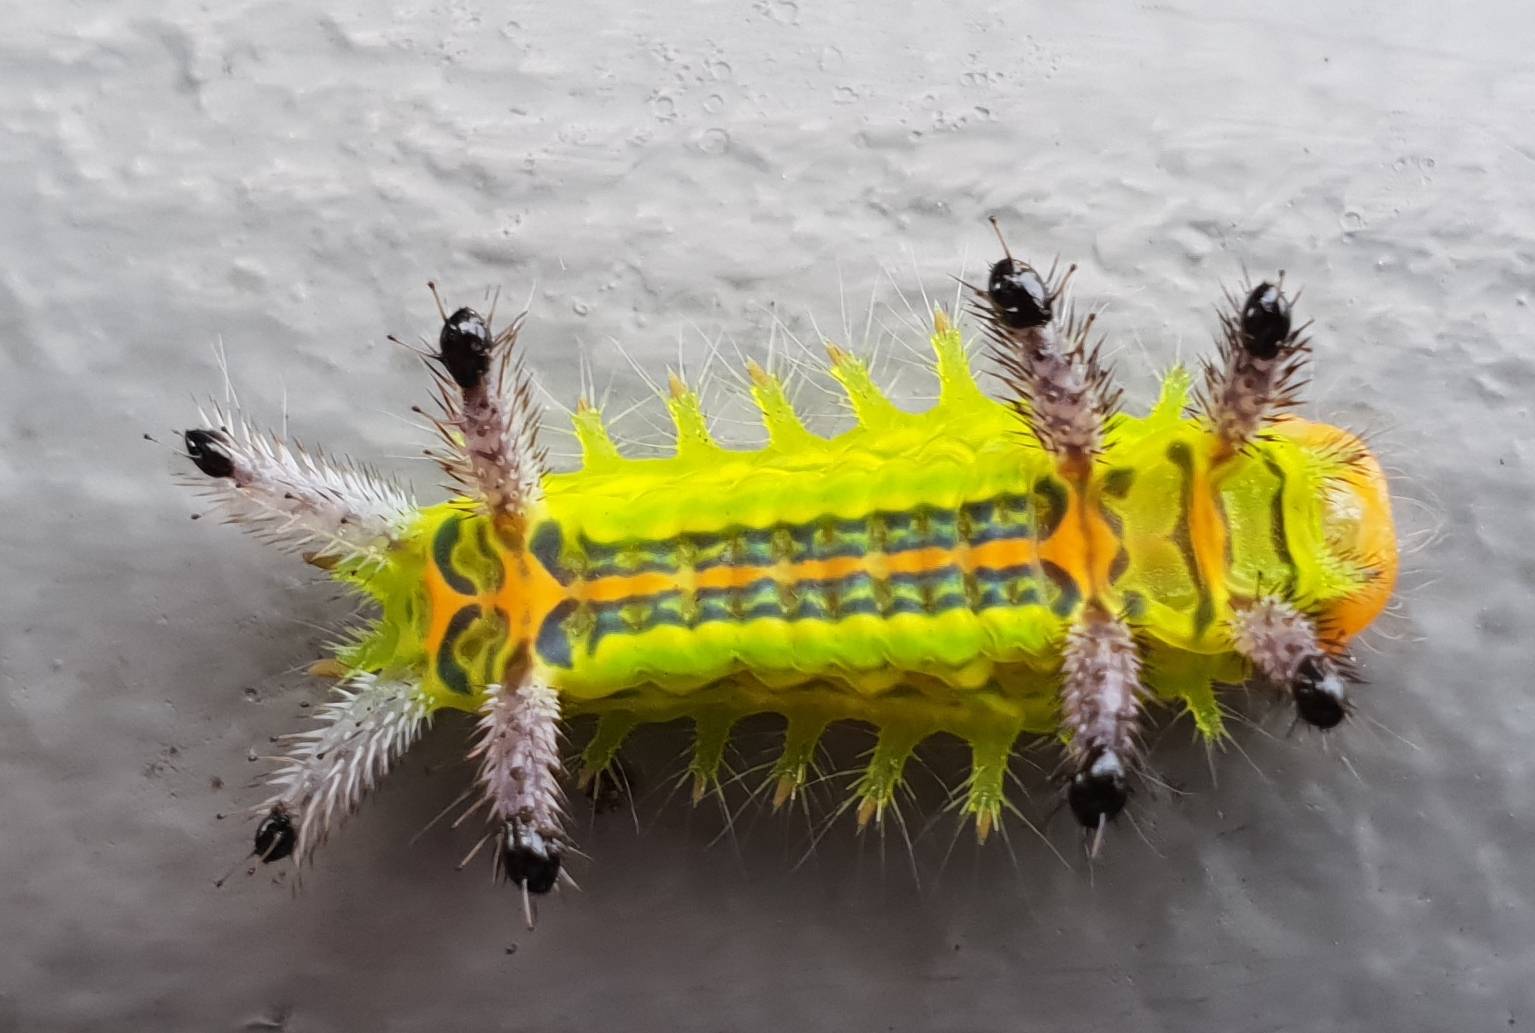 Cup moth/nettle slug (caterpillar)